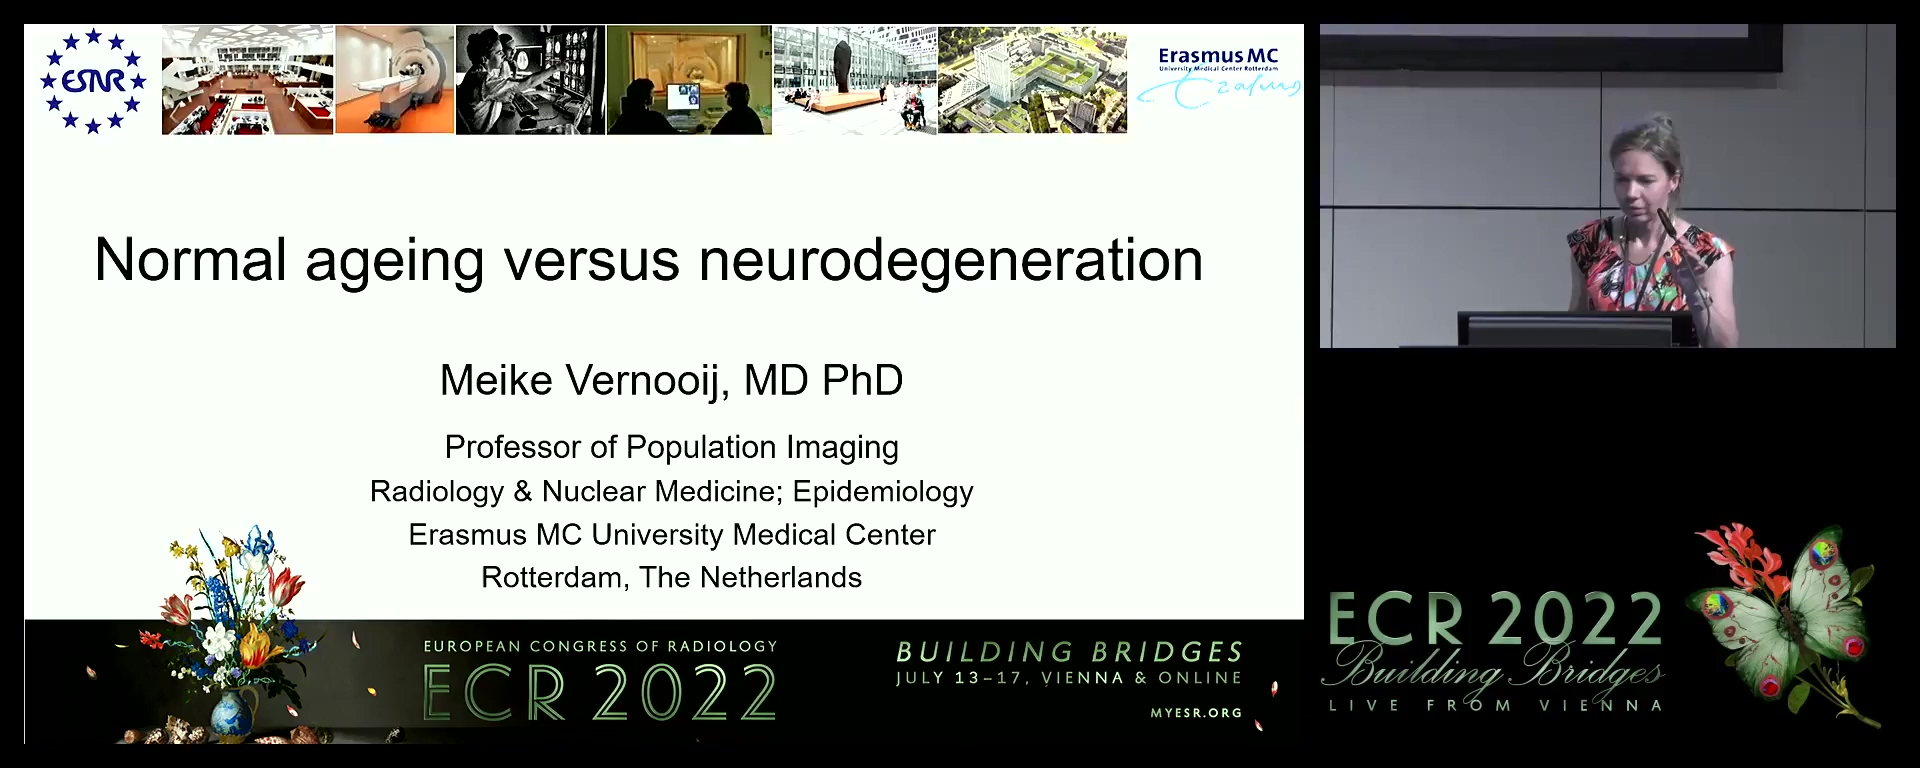 Normal ageing and imaging of the elderly versus neurodegenerative disorders - Meike Vernooij, Rotterdam / NL